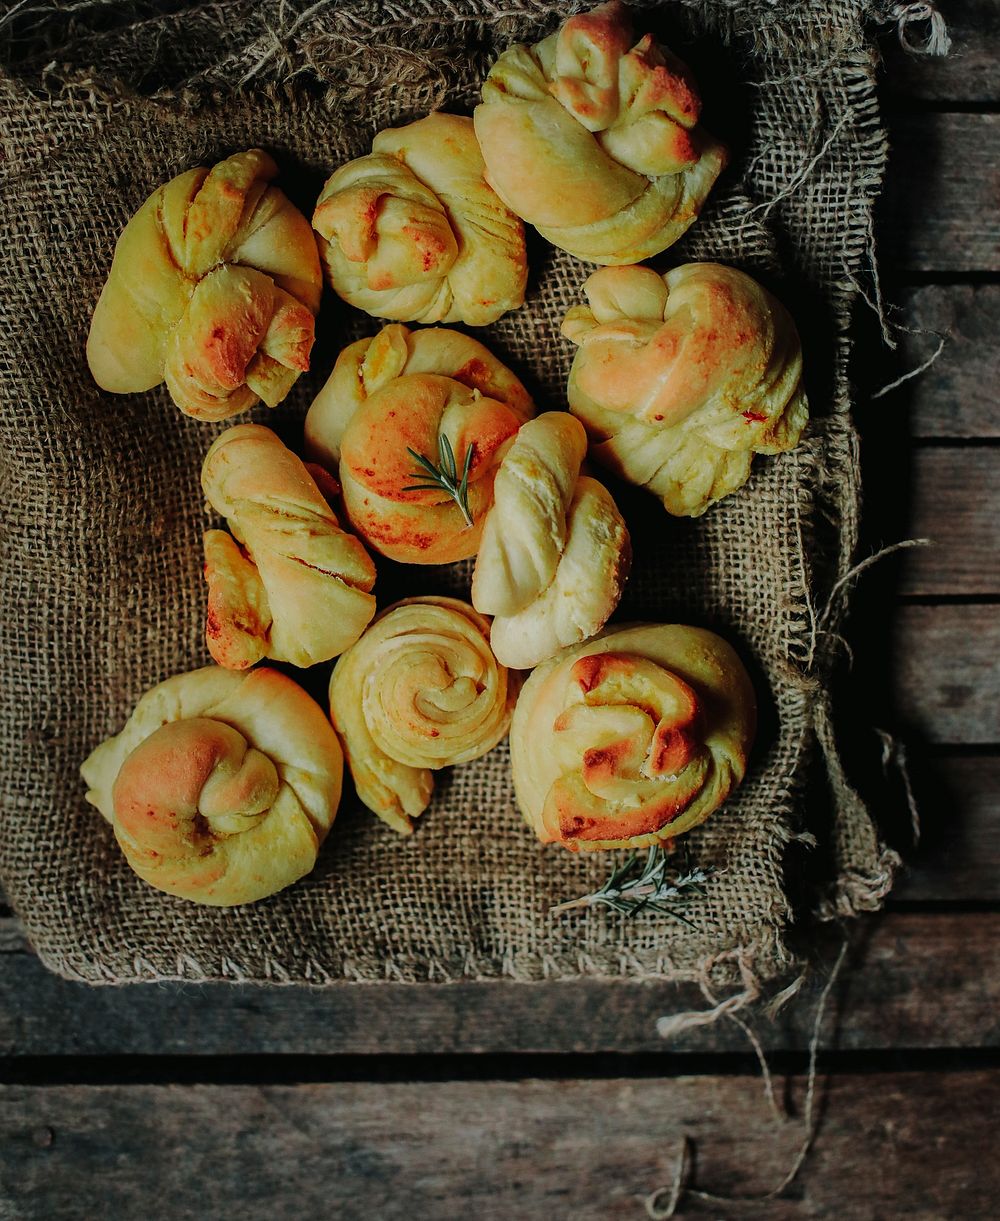 Free homemade vegan garlic rolls image, public domain food CC0 photo.